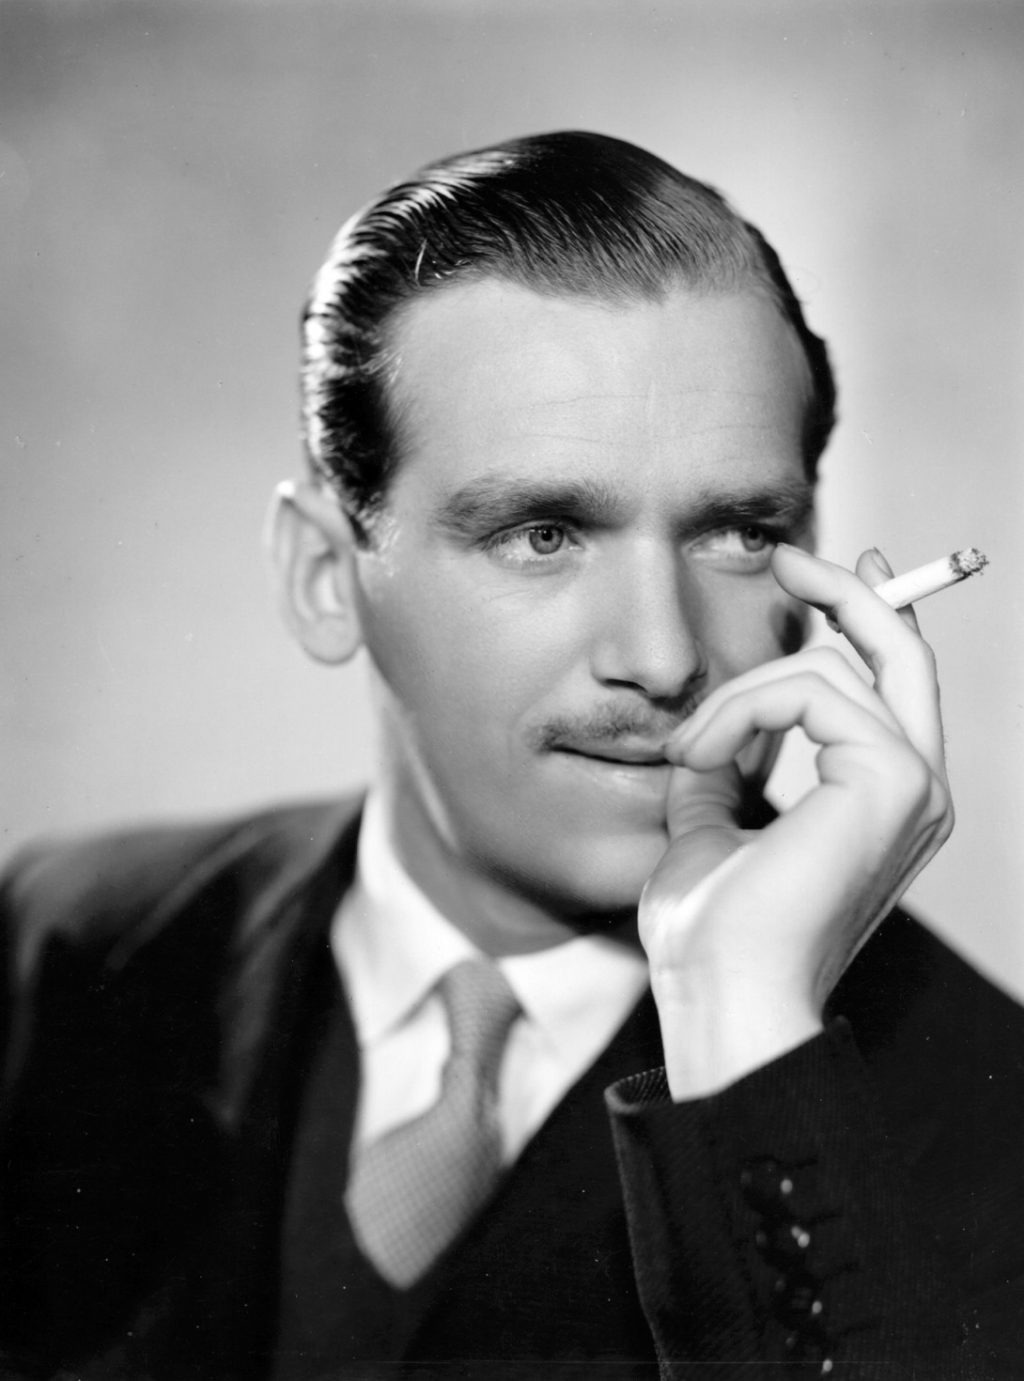 Douglas Fairbanks, directly from the Roaring Twenties!